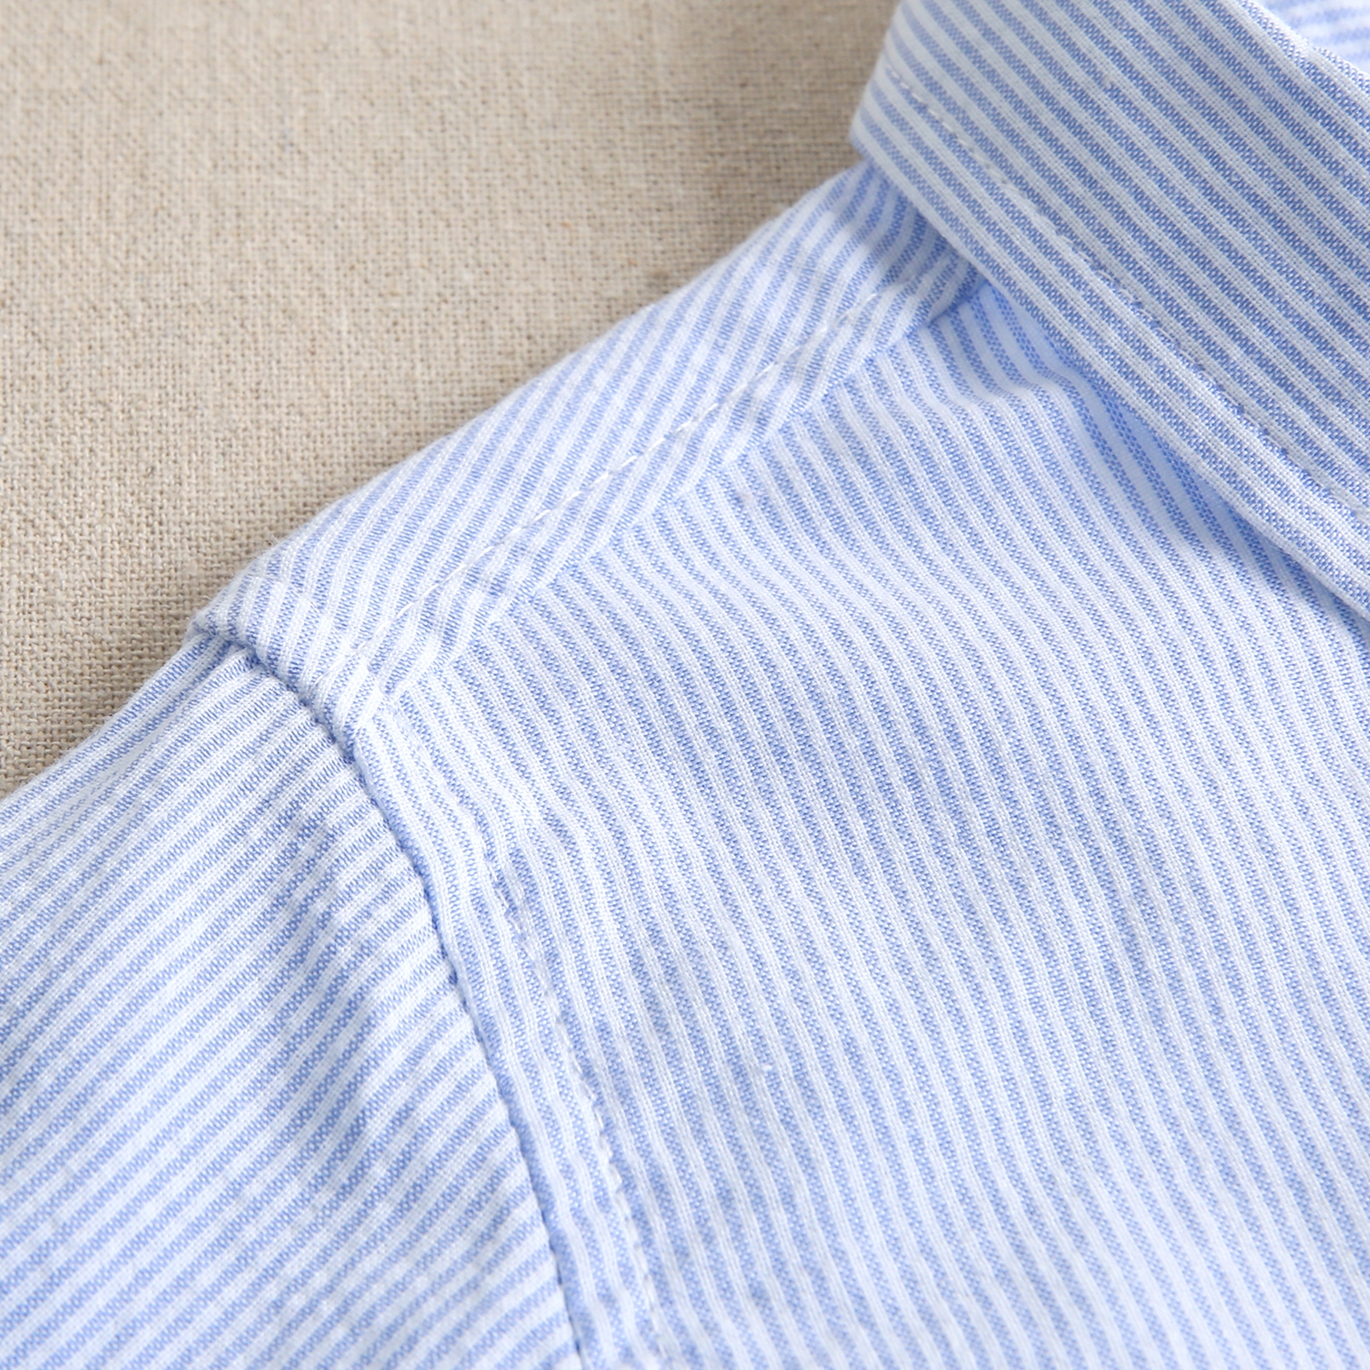 Imagen de Camisa de niño de manga larga en color azul claro